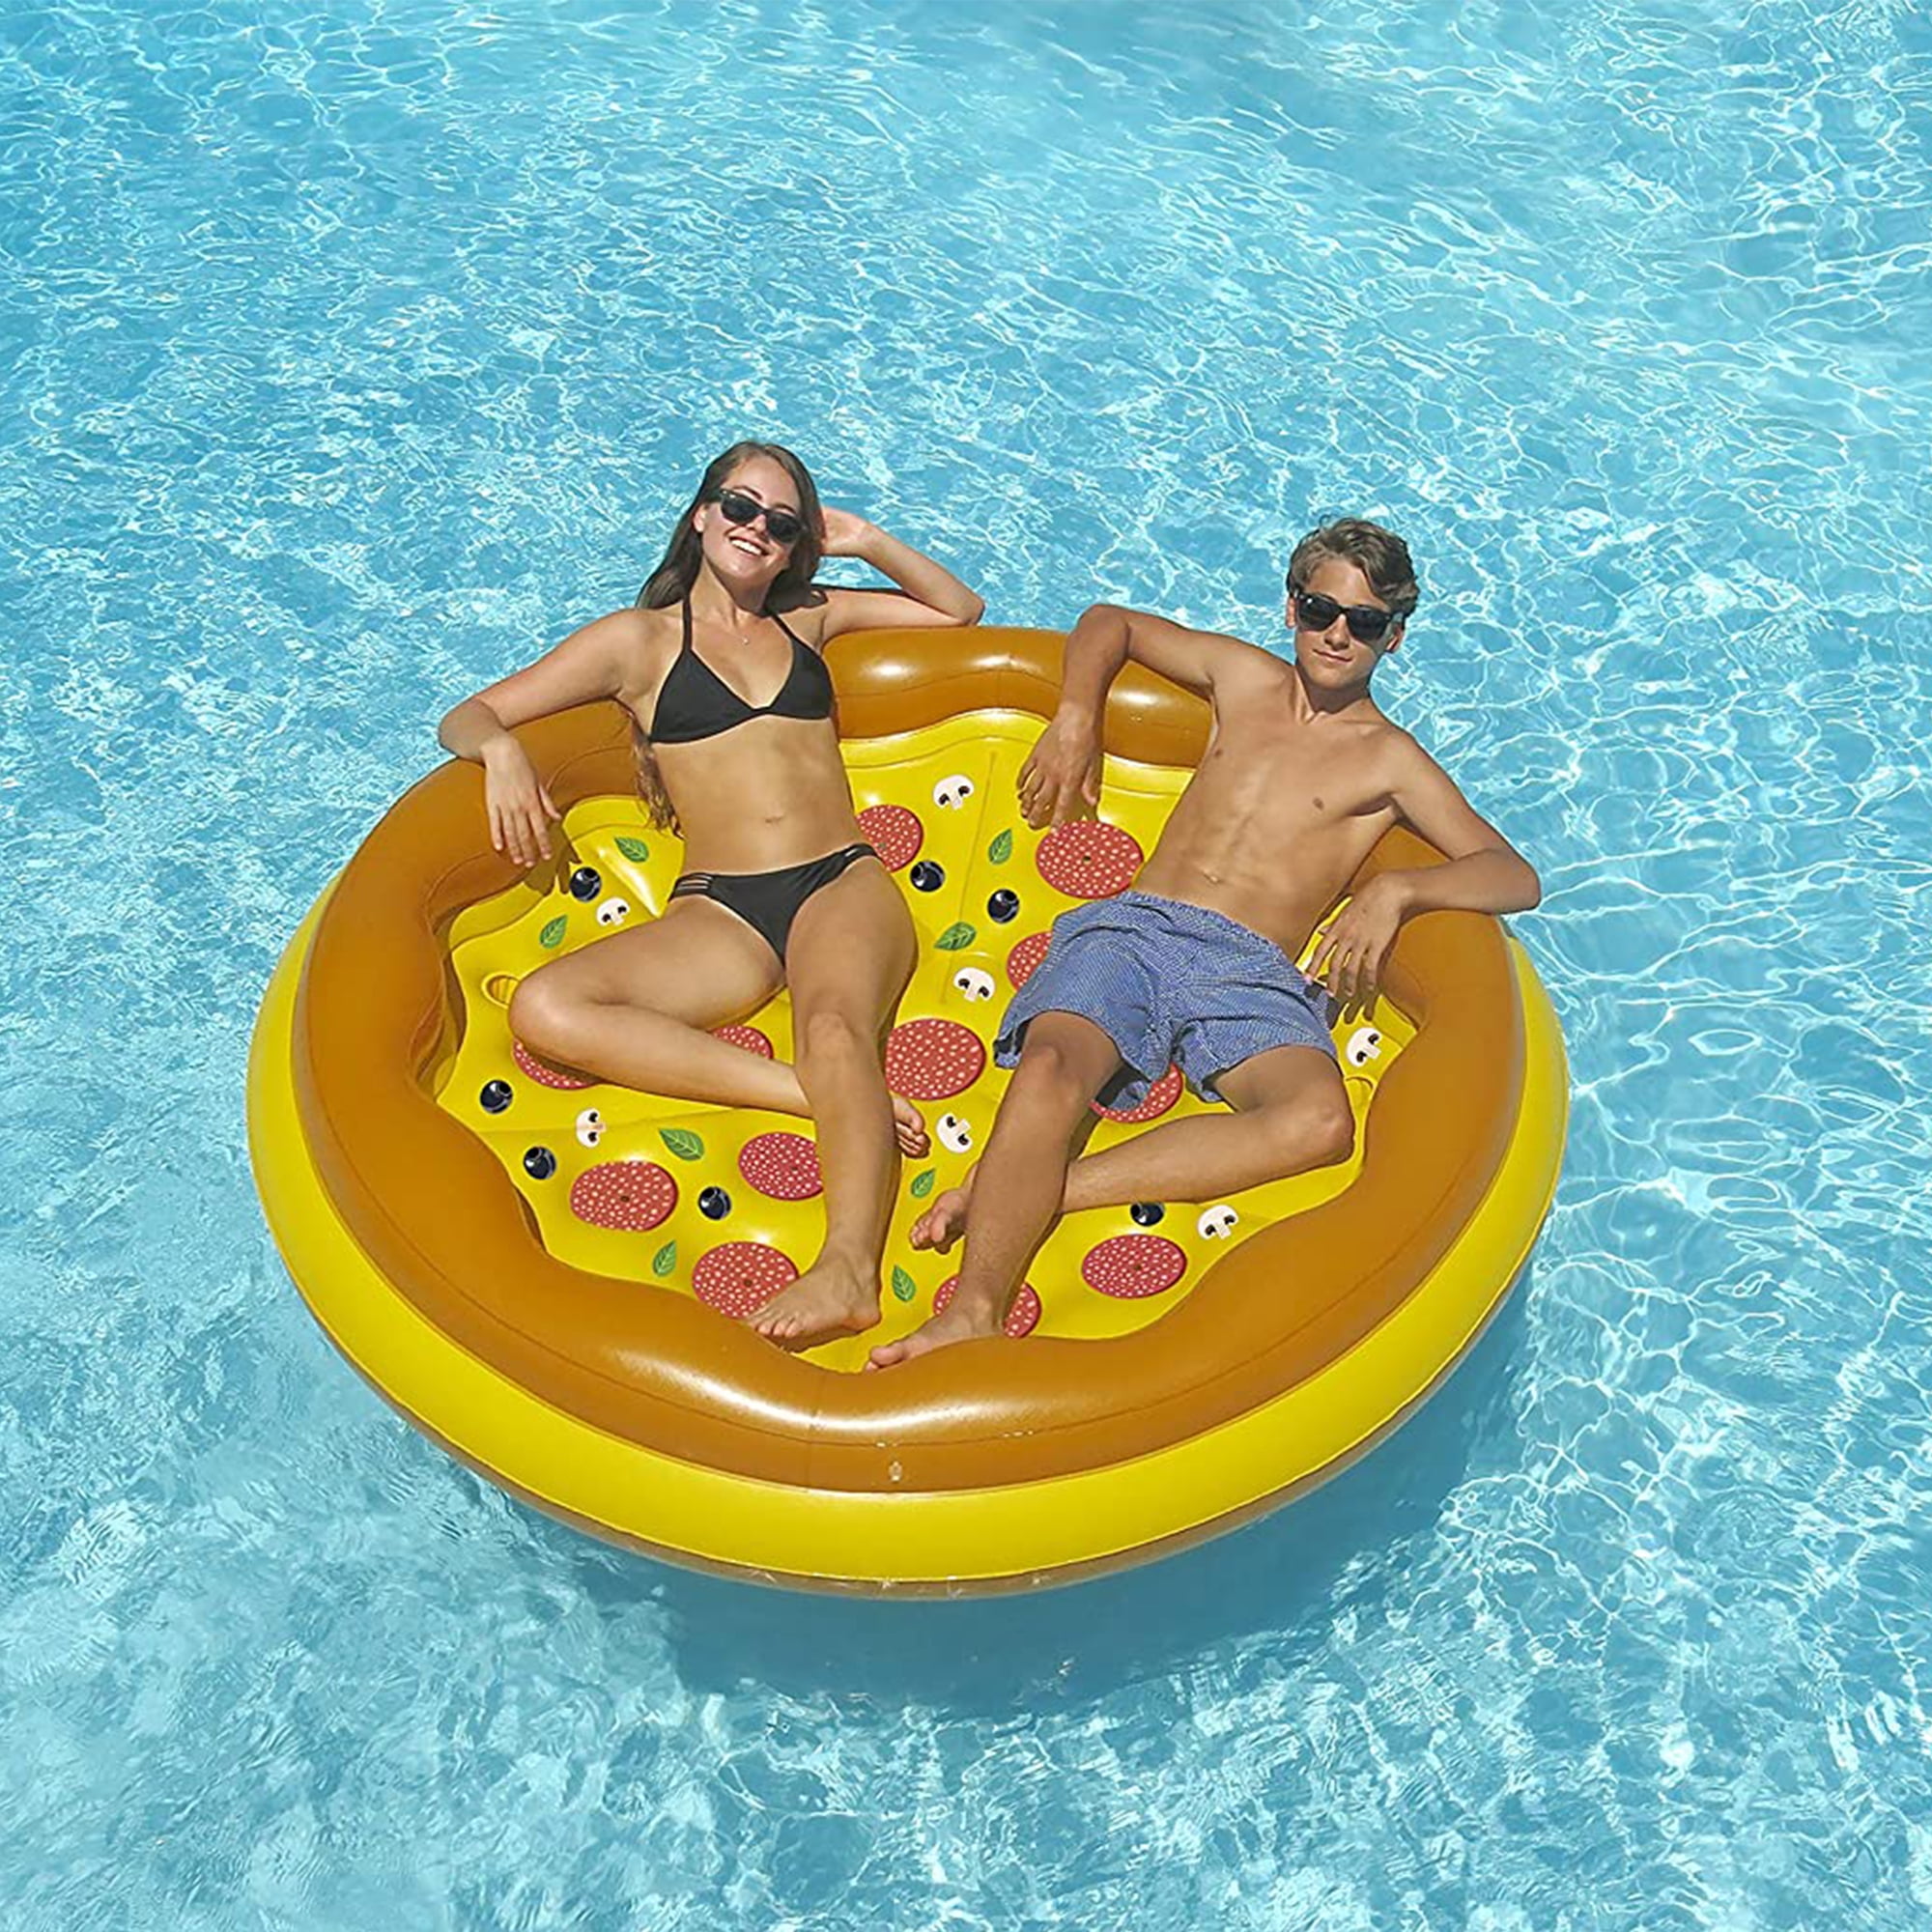 Swimline Cookie Float Floats Rafts Pool Fun Pools Spas Yard Garden Outdoor Home 